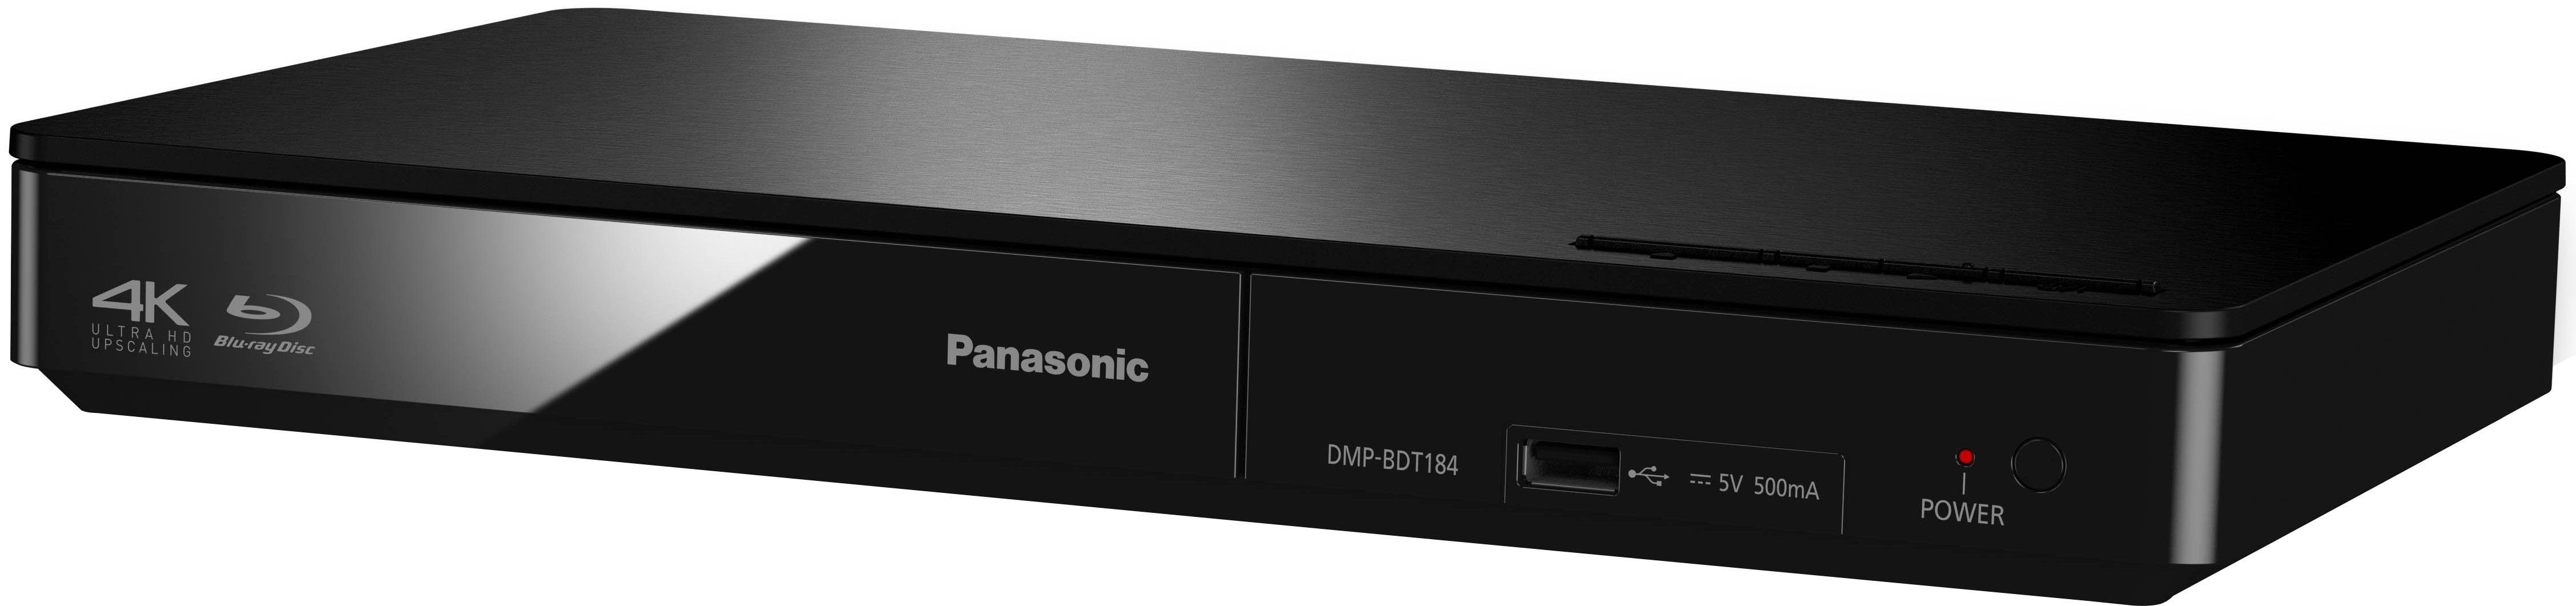 Panasonic DMP-BDT184 / DMP-BDT185 Blu-ray-Player (LAN (Ethernet), 4K Upscaling, Schnellstart-Modus) schwarz | Blu-ray-Player